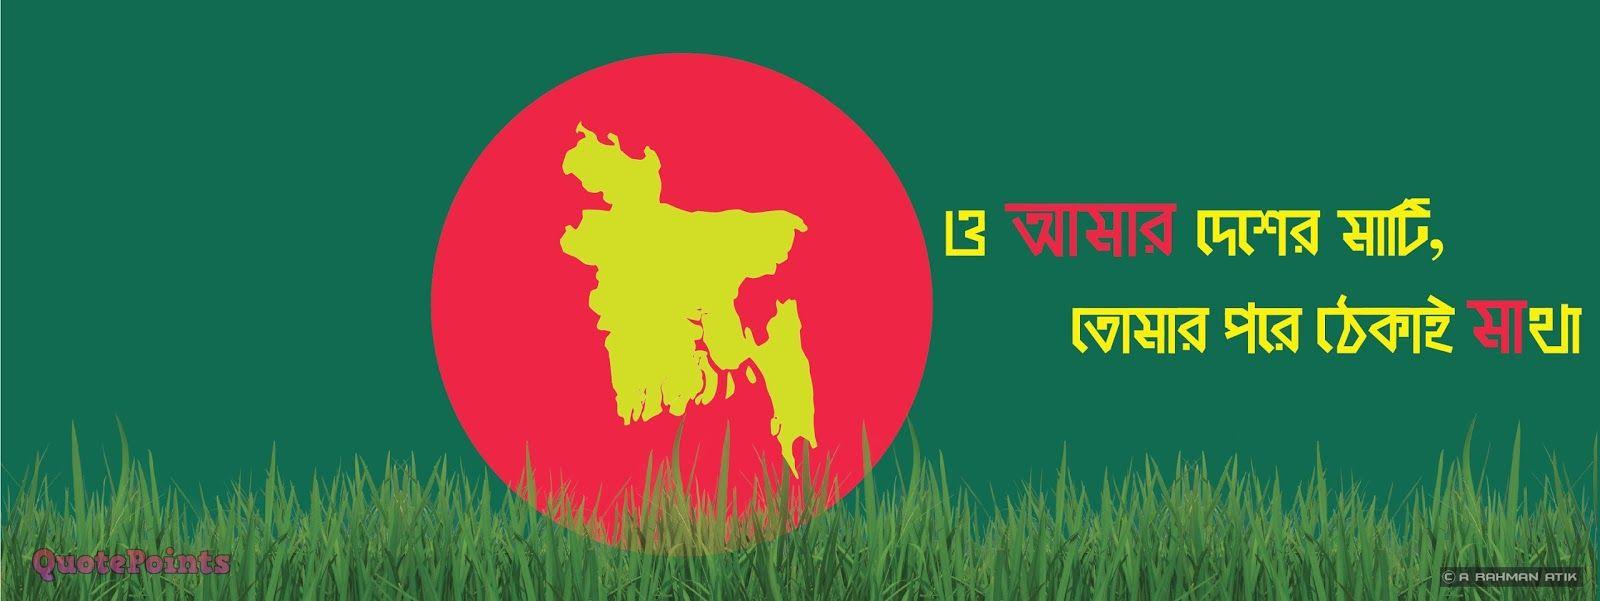 Bijoy Dibosh Banner Download 2017 December 2017